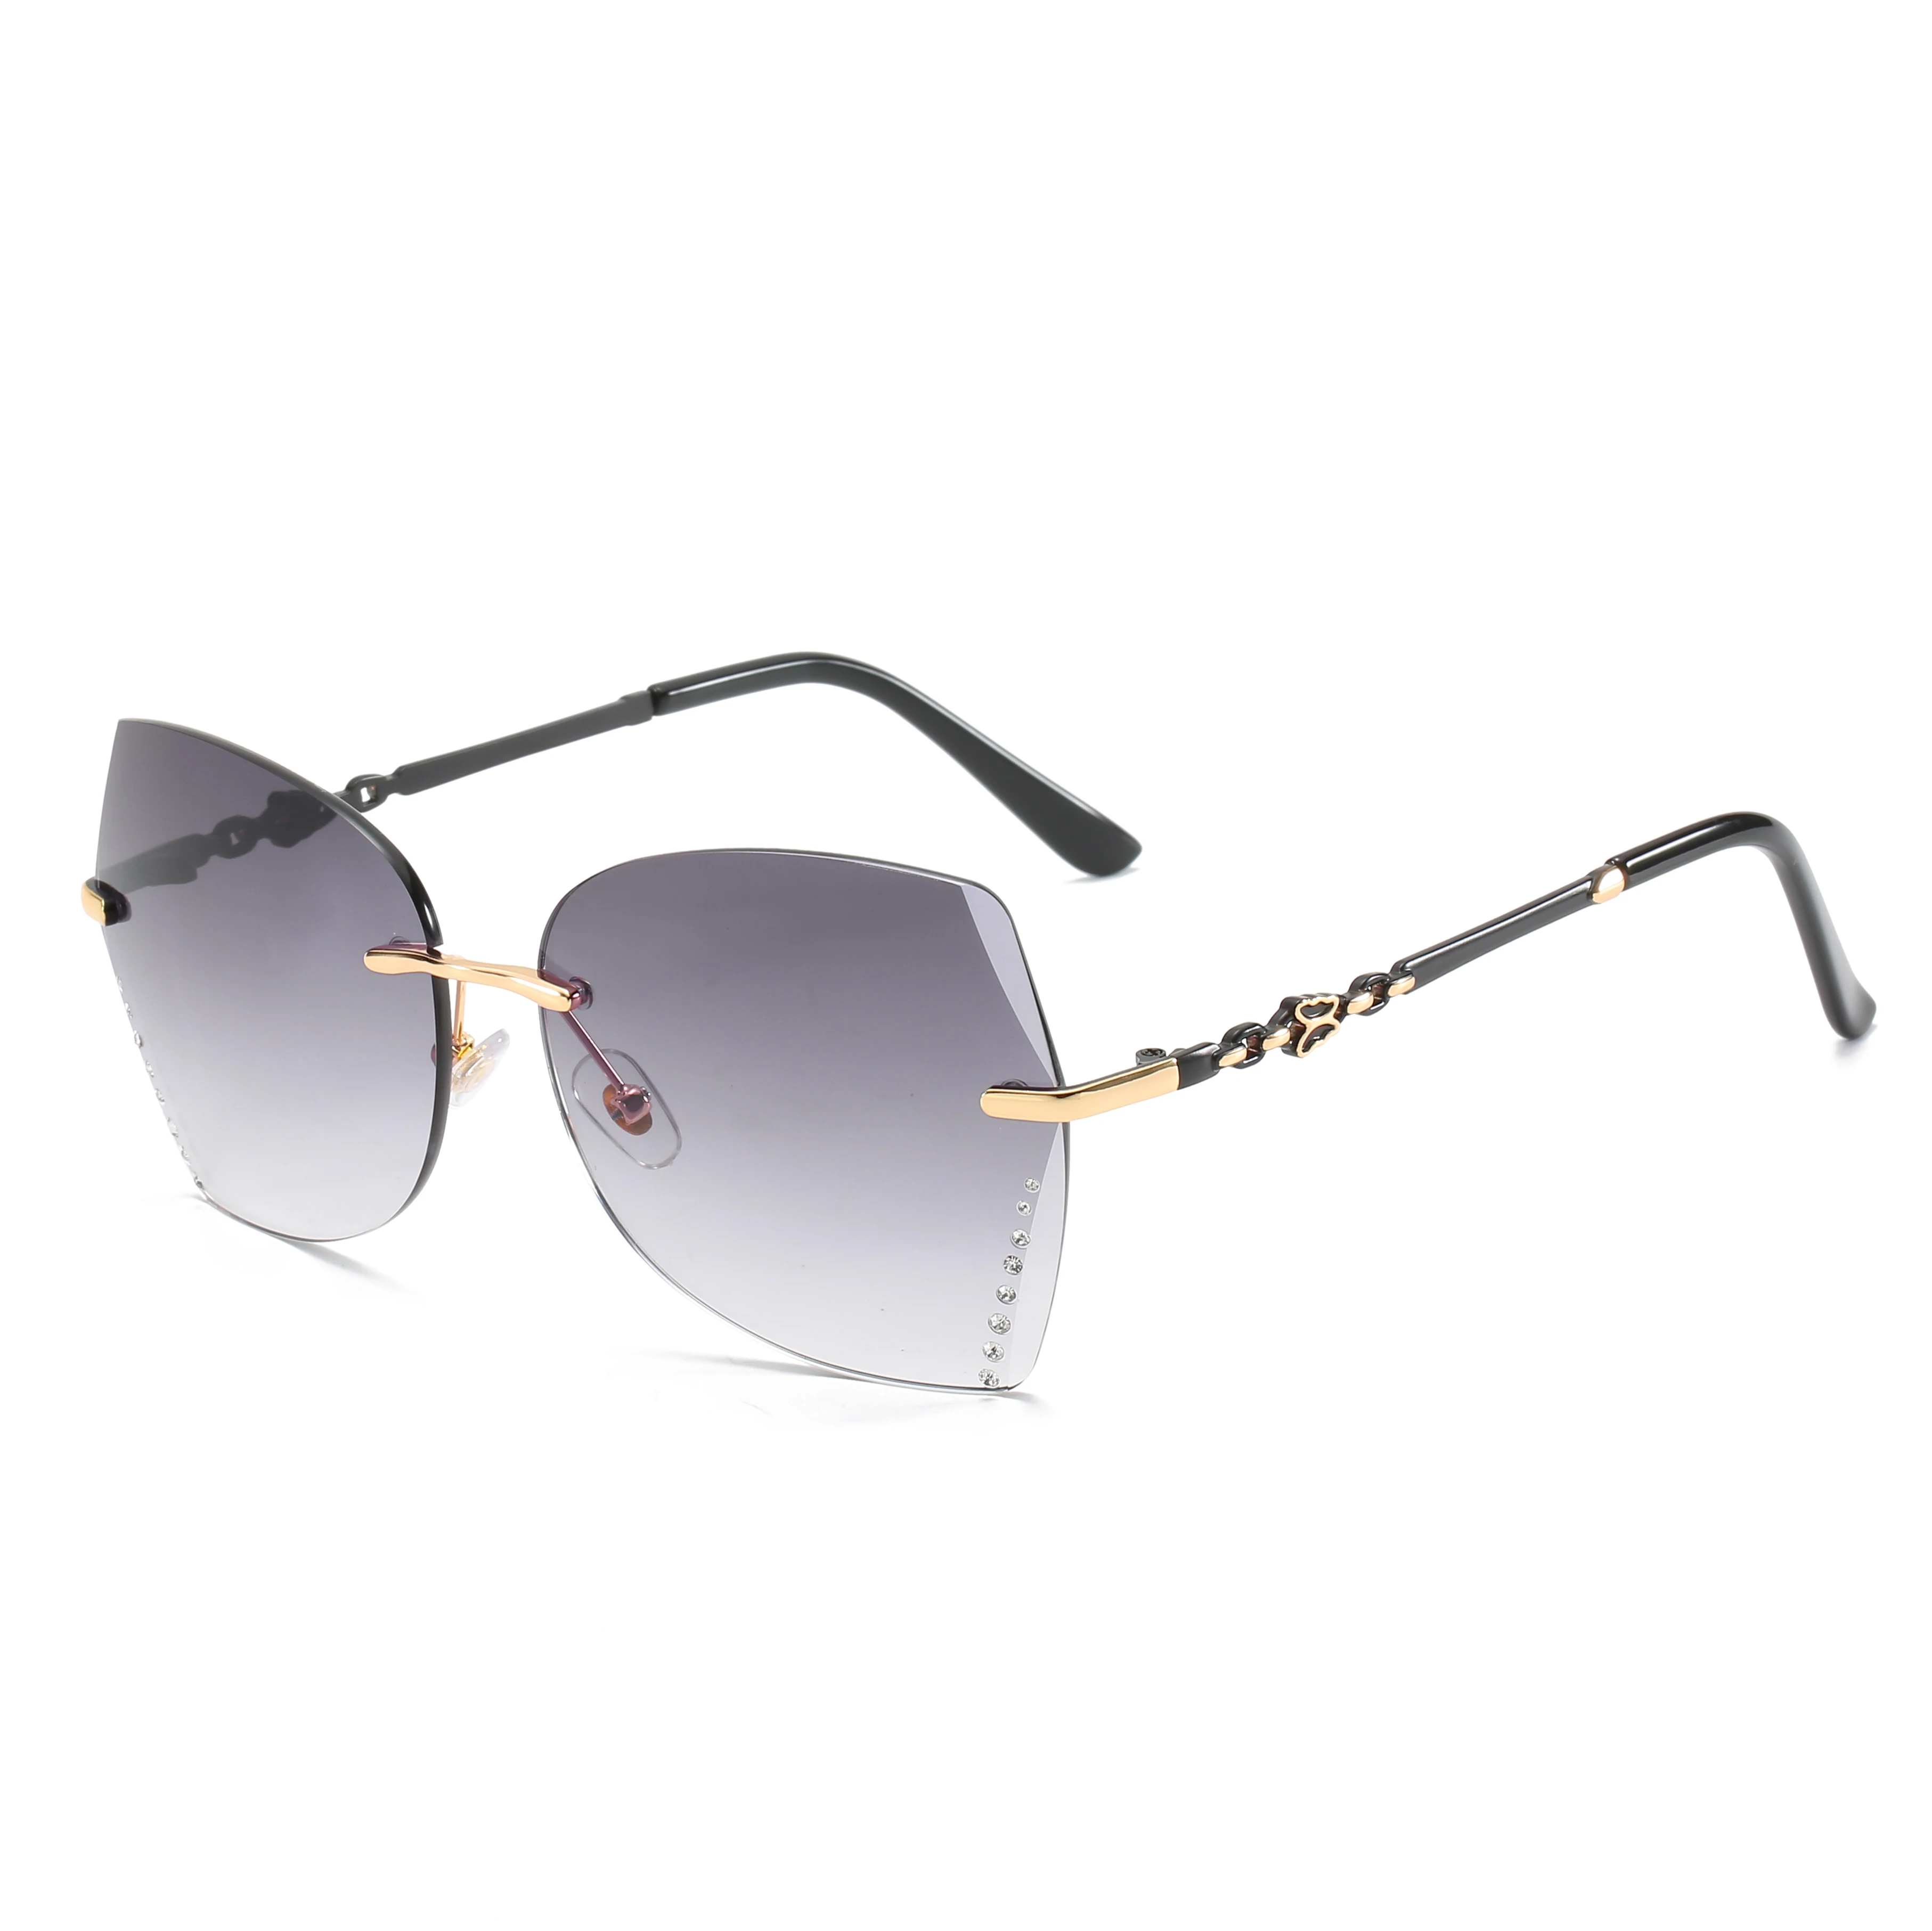 

Banei Sun Glasses Unique Metal Shield Designer Delicate Shades Unisex Novelty 2020 New Arrivals Sunglasses Luxury